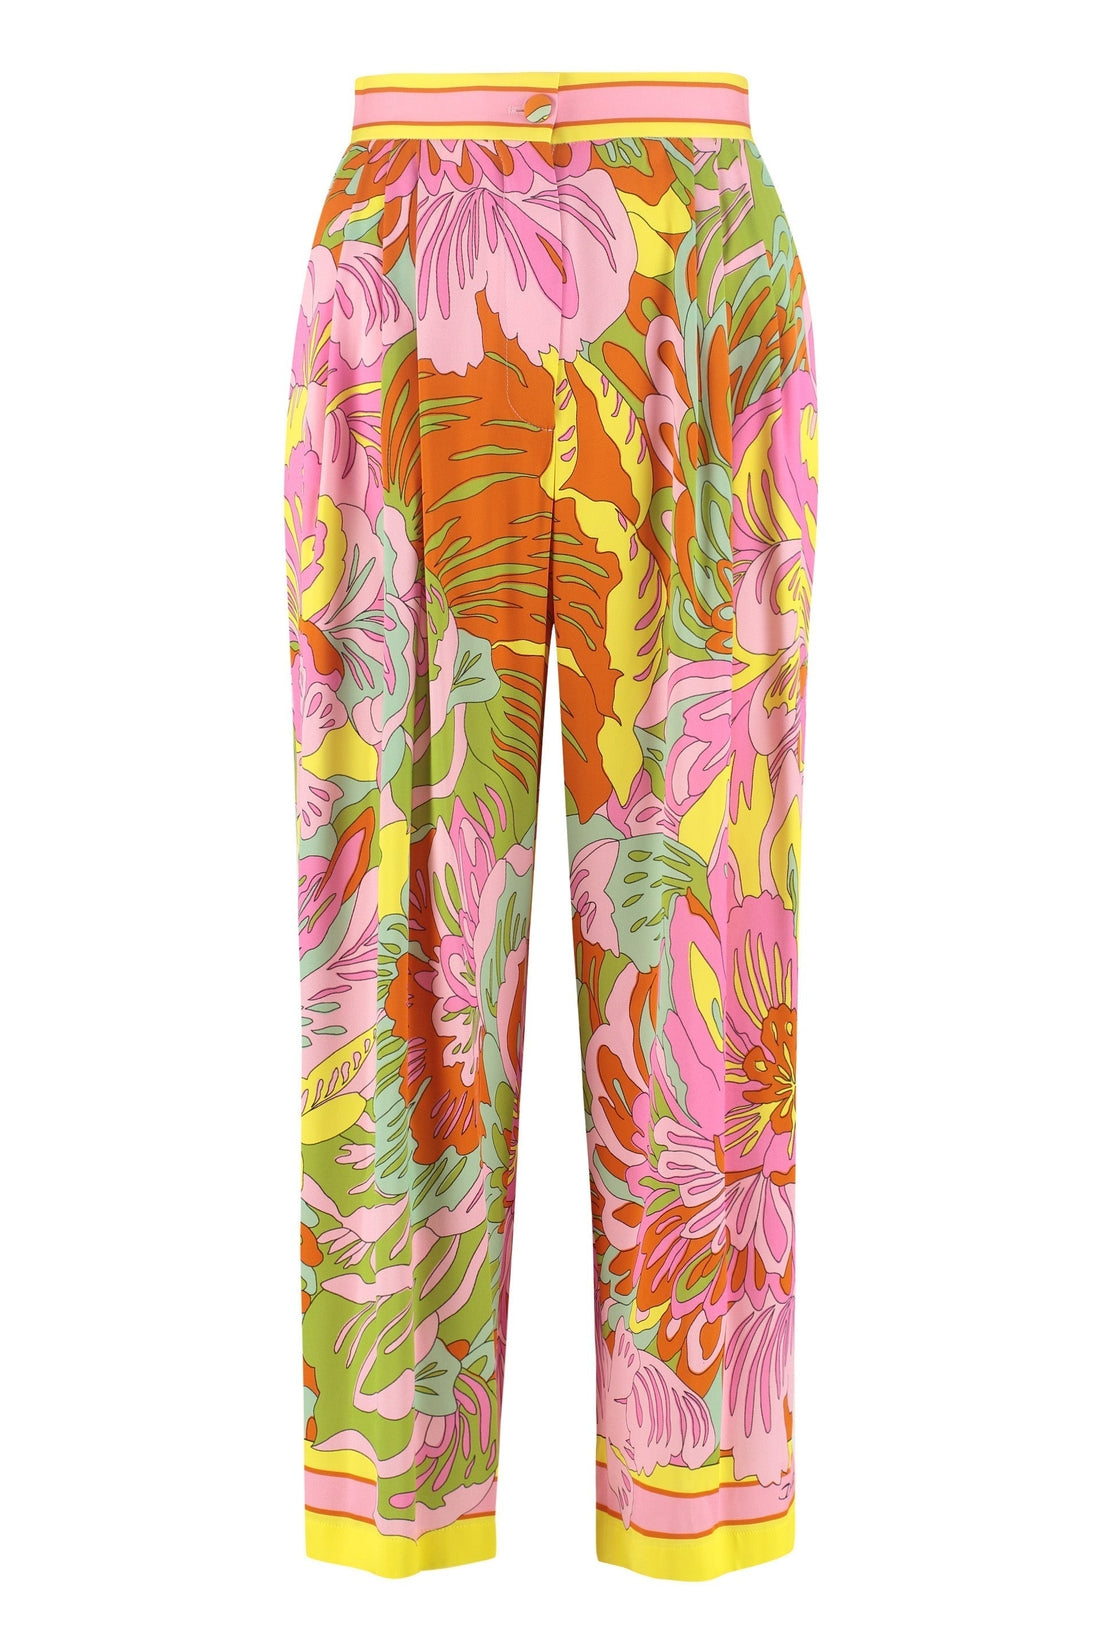 Dolce & Gabbana-OUTLET-SALE-Printed silk pants-ARCHIVIST